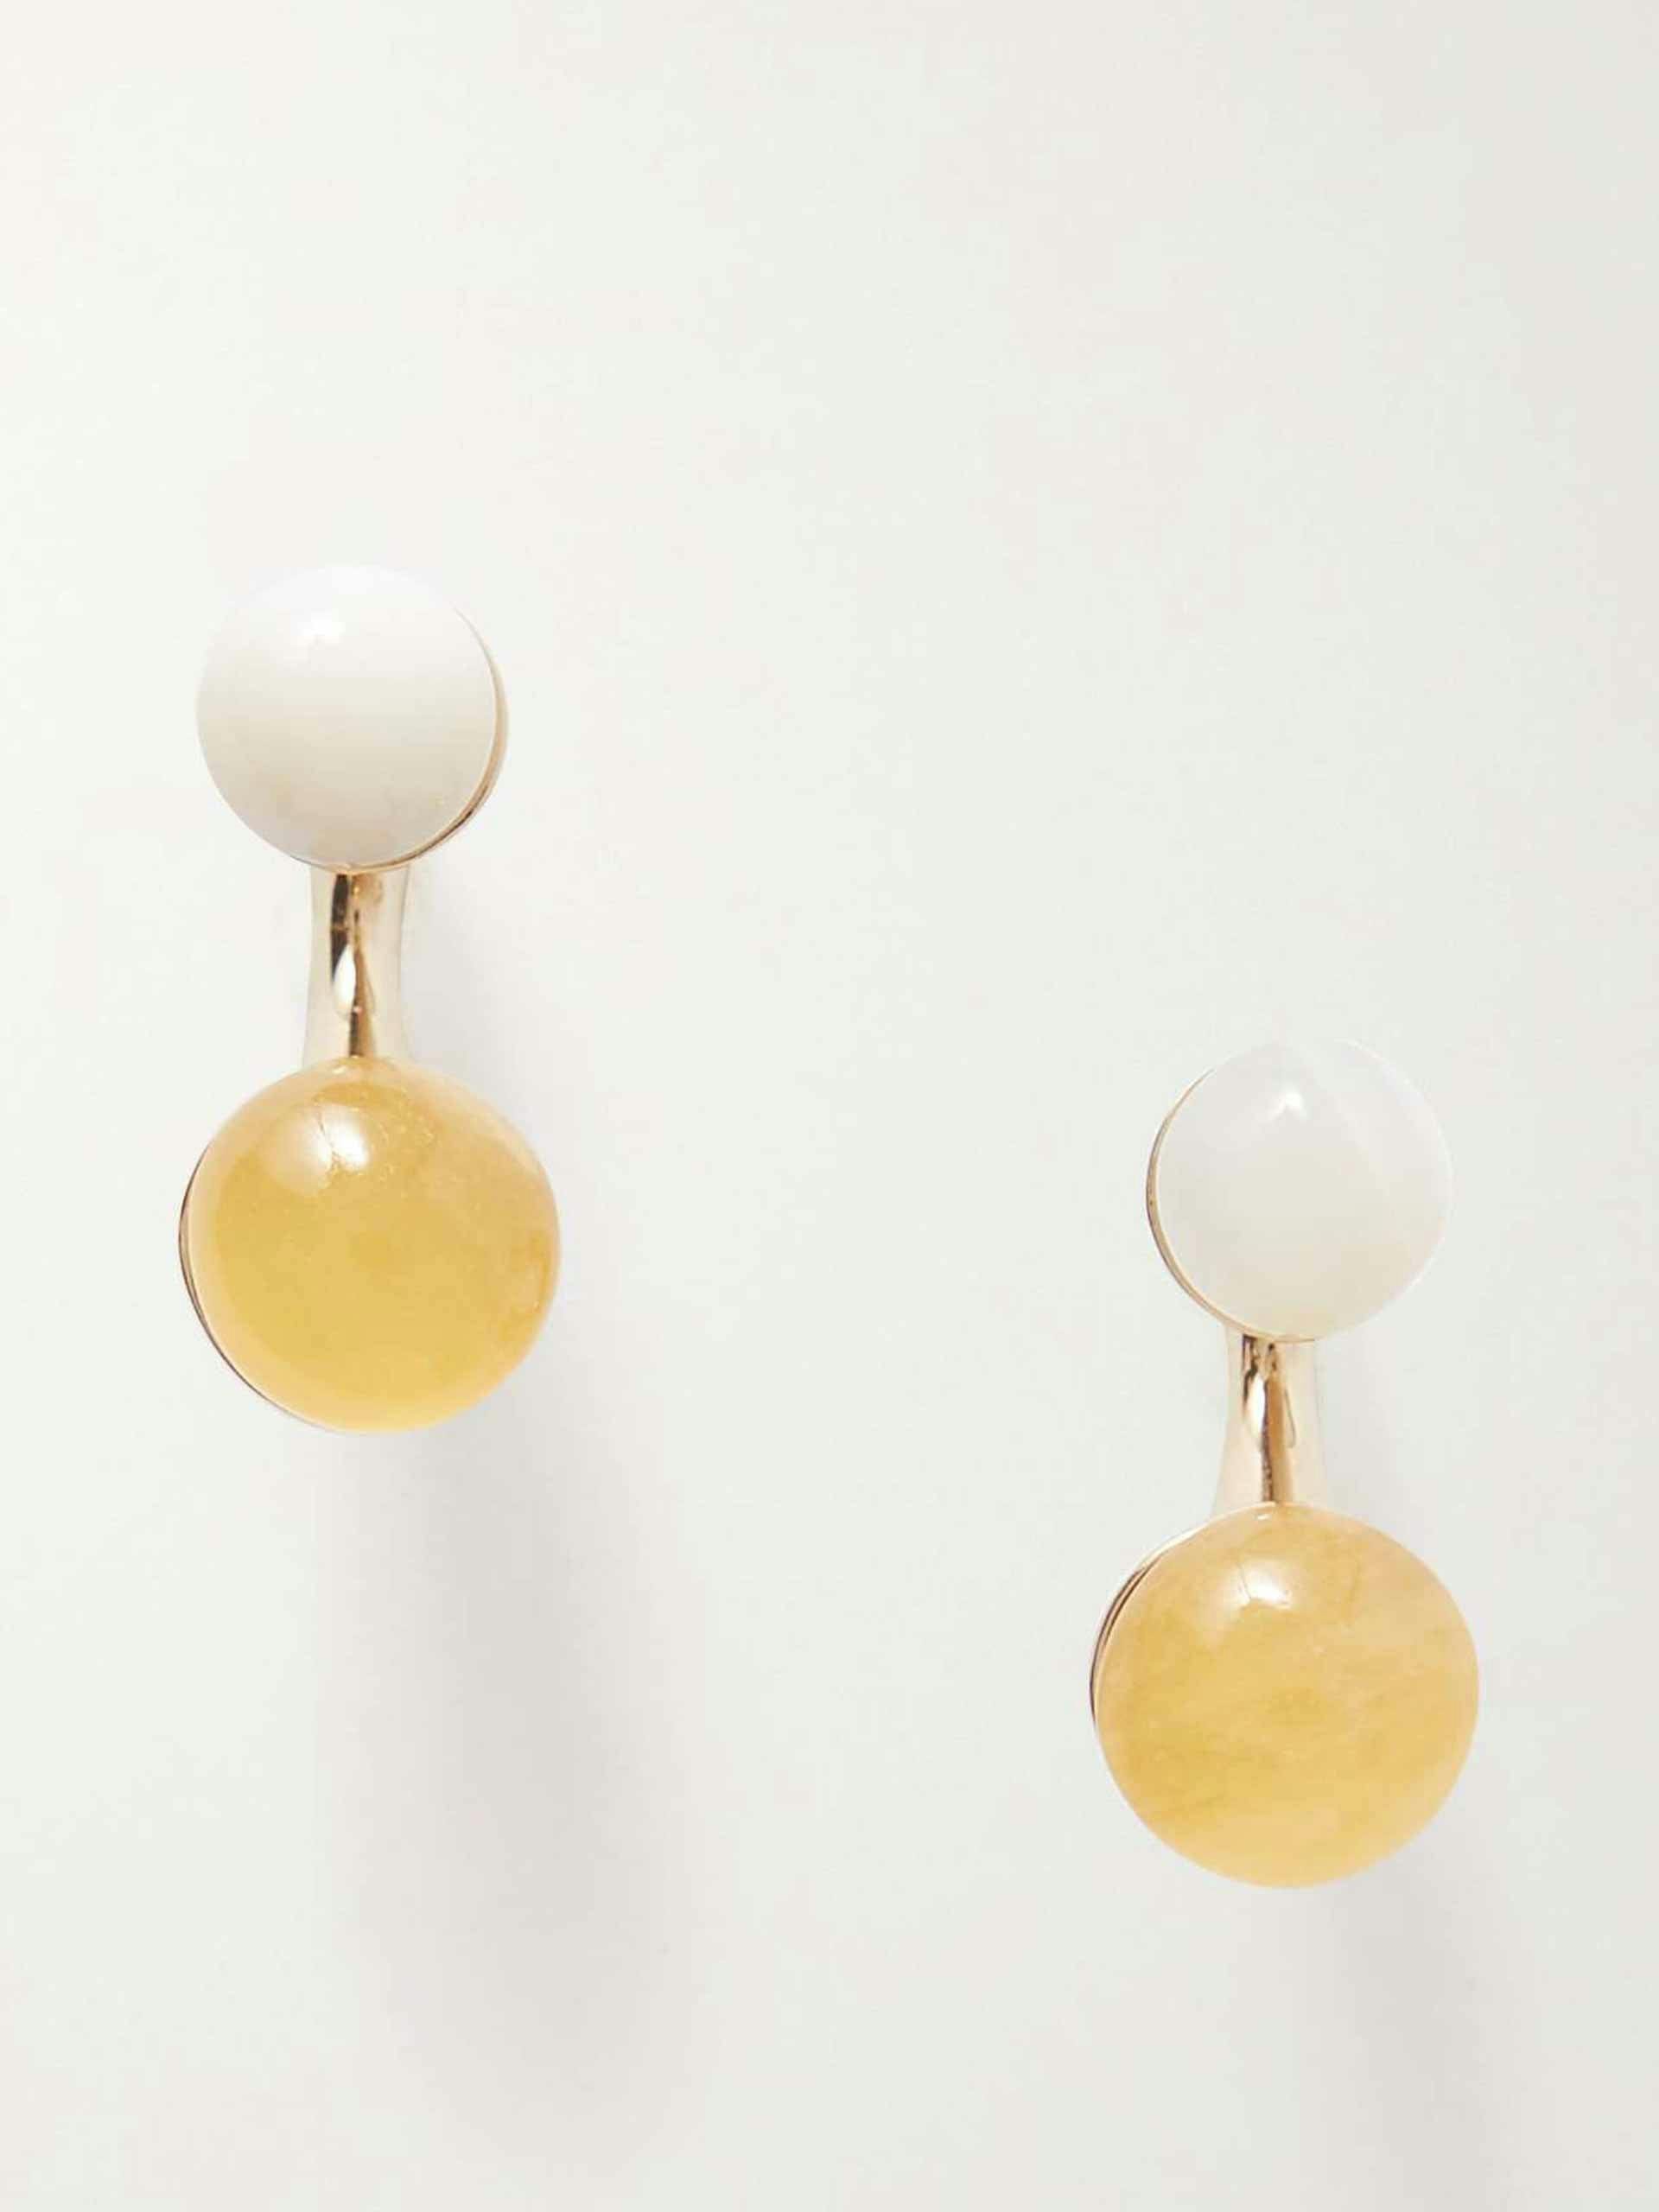 White and yellow earrings